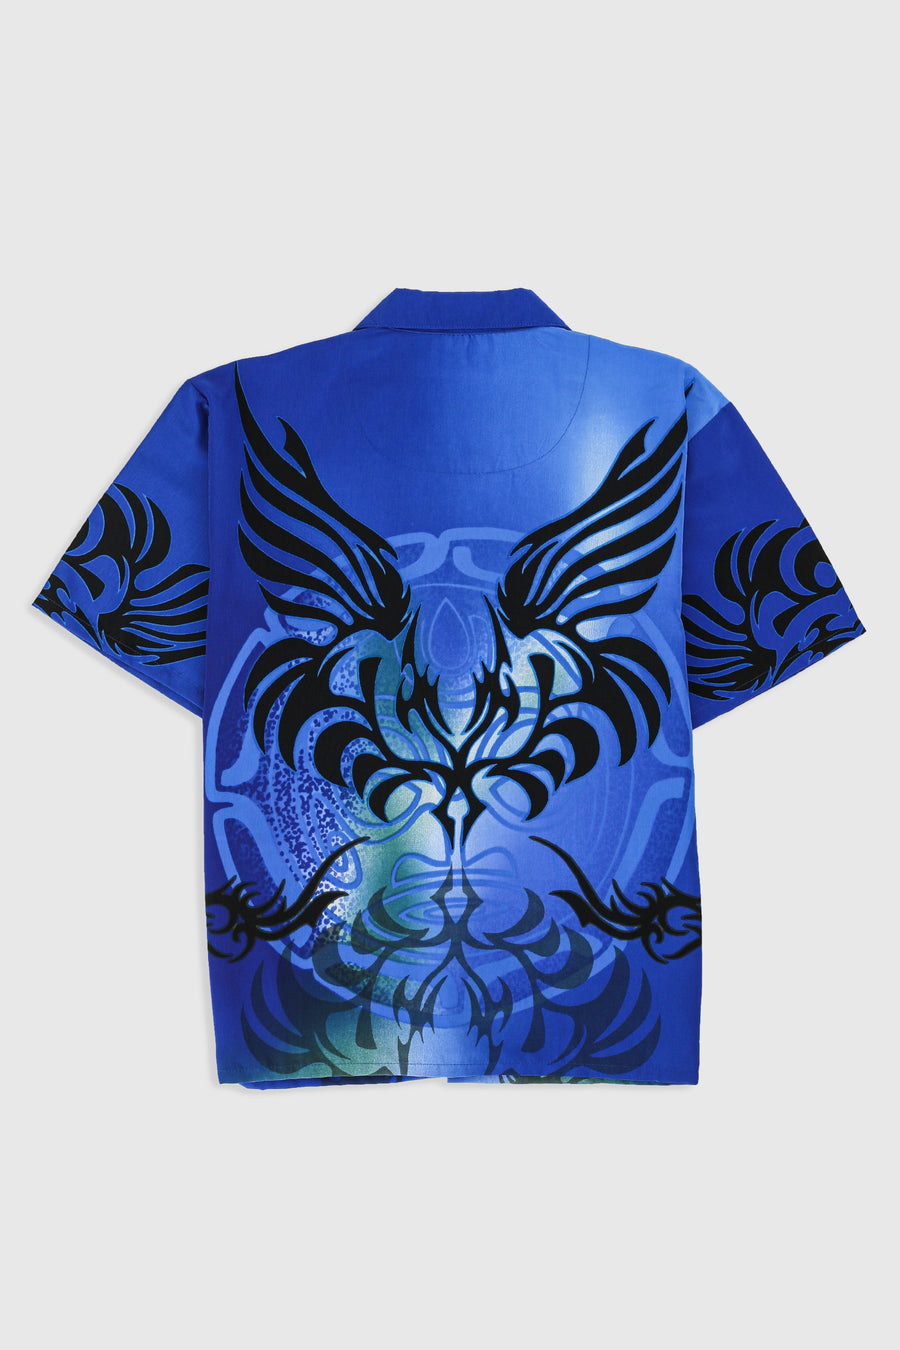 Deadstock Dragonfly Blue Tribal Camp Shirt - M, L, XXL